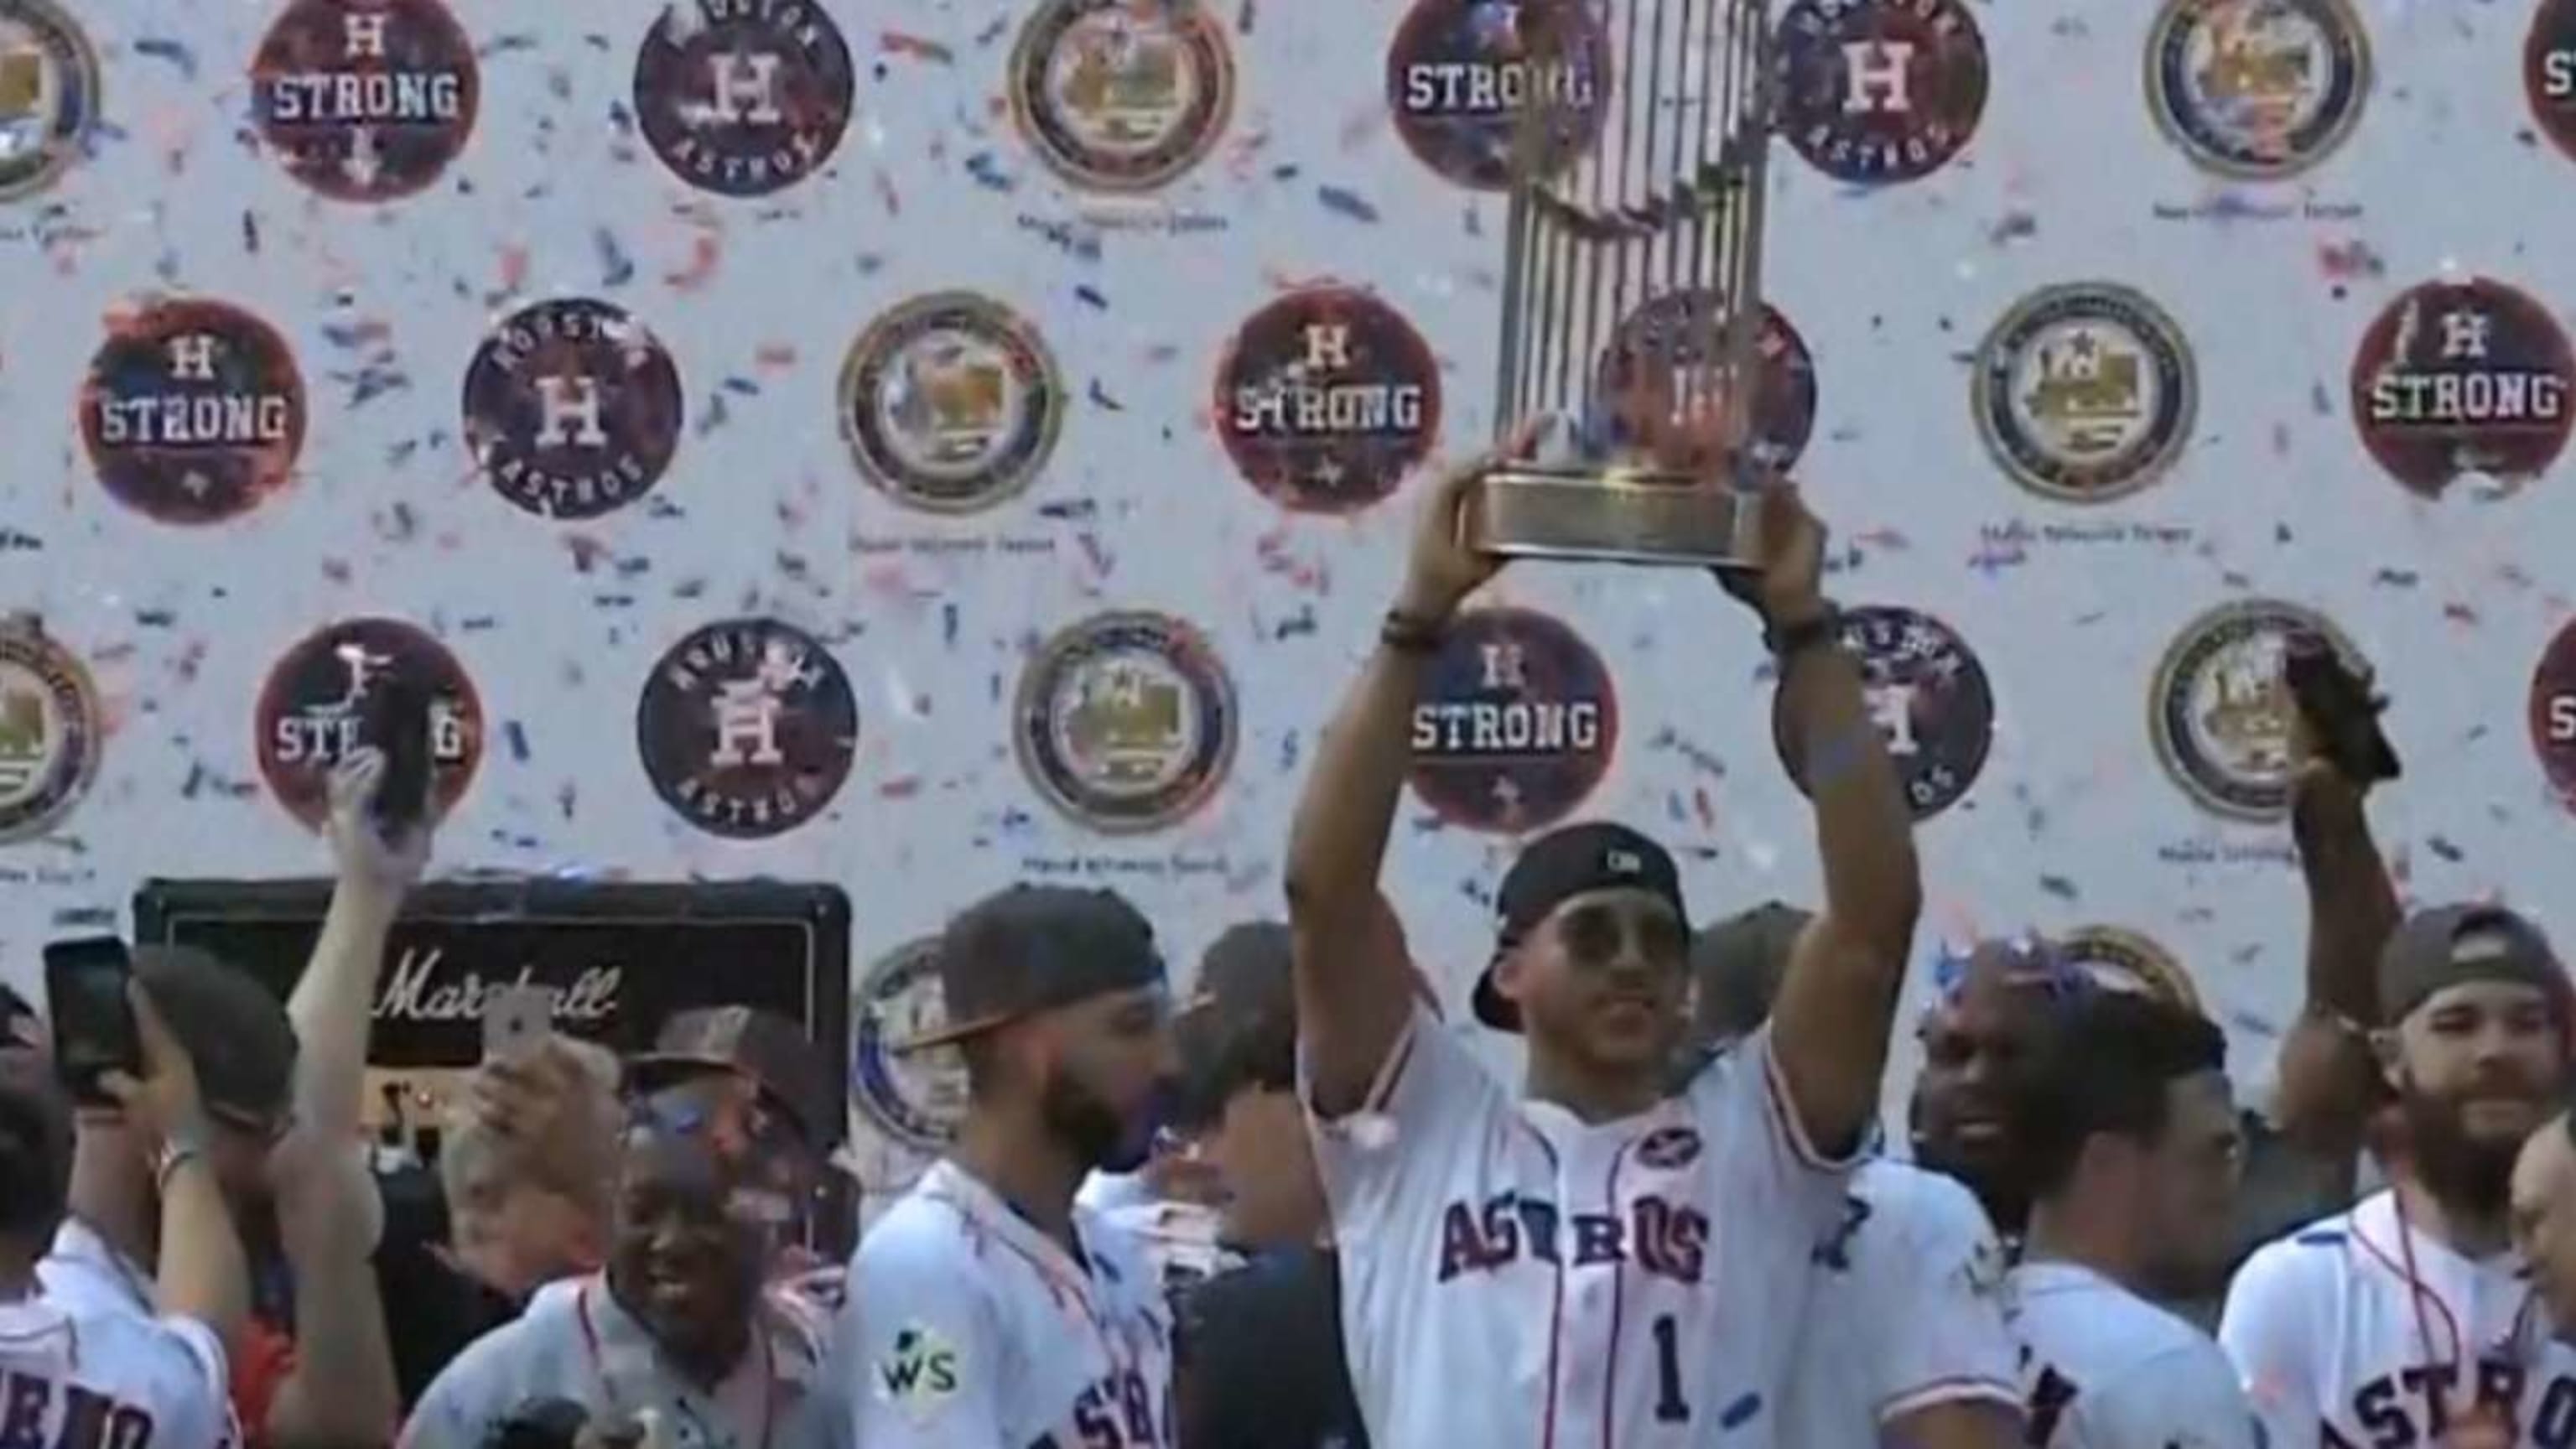 2017 World Series Champions: Houston Astros [2017] - Best Buy